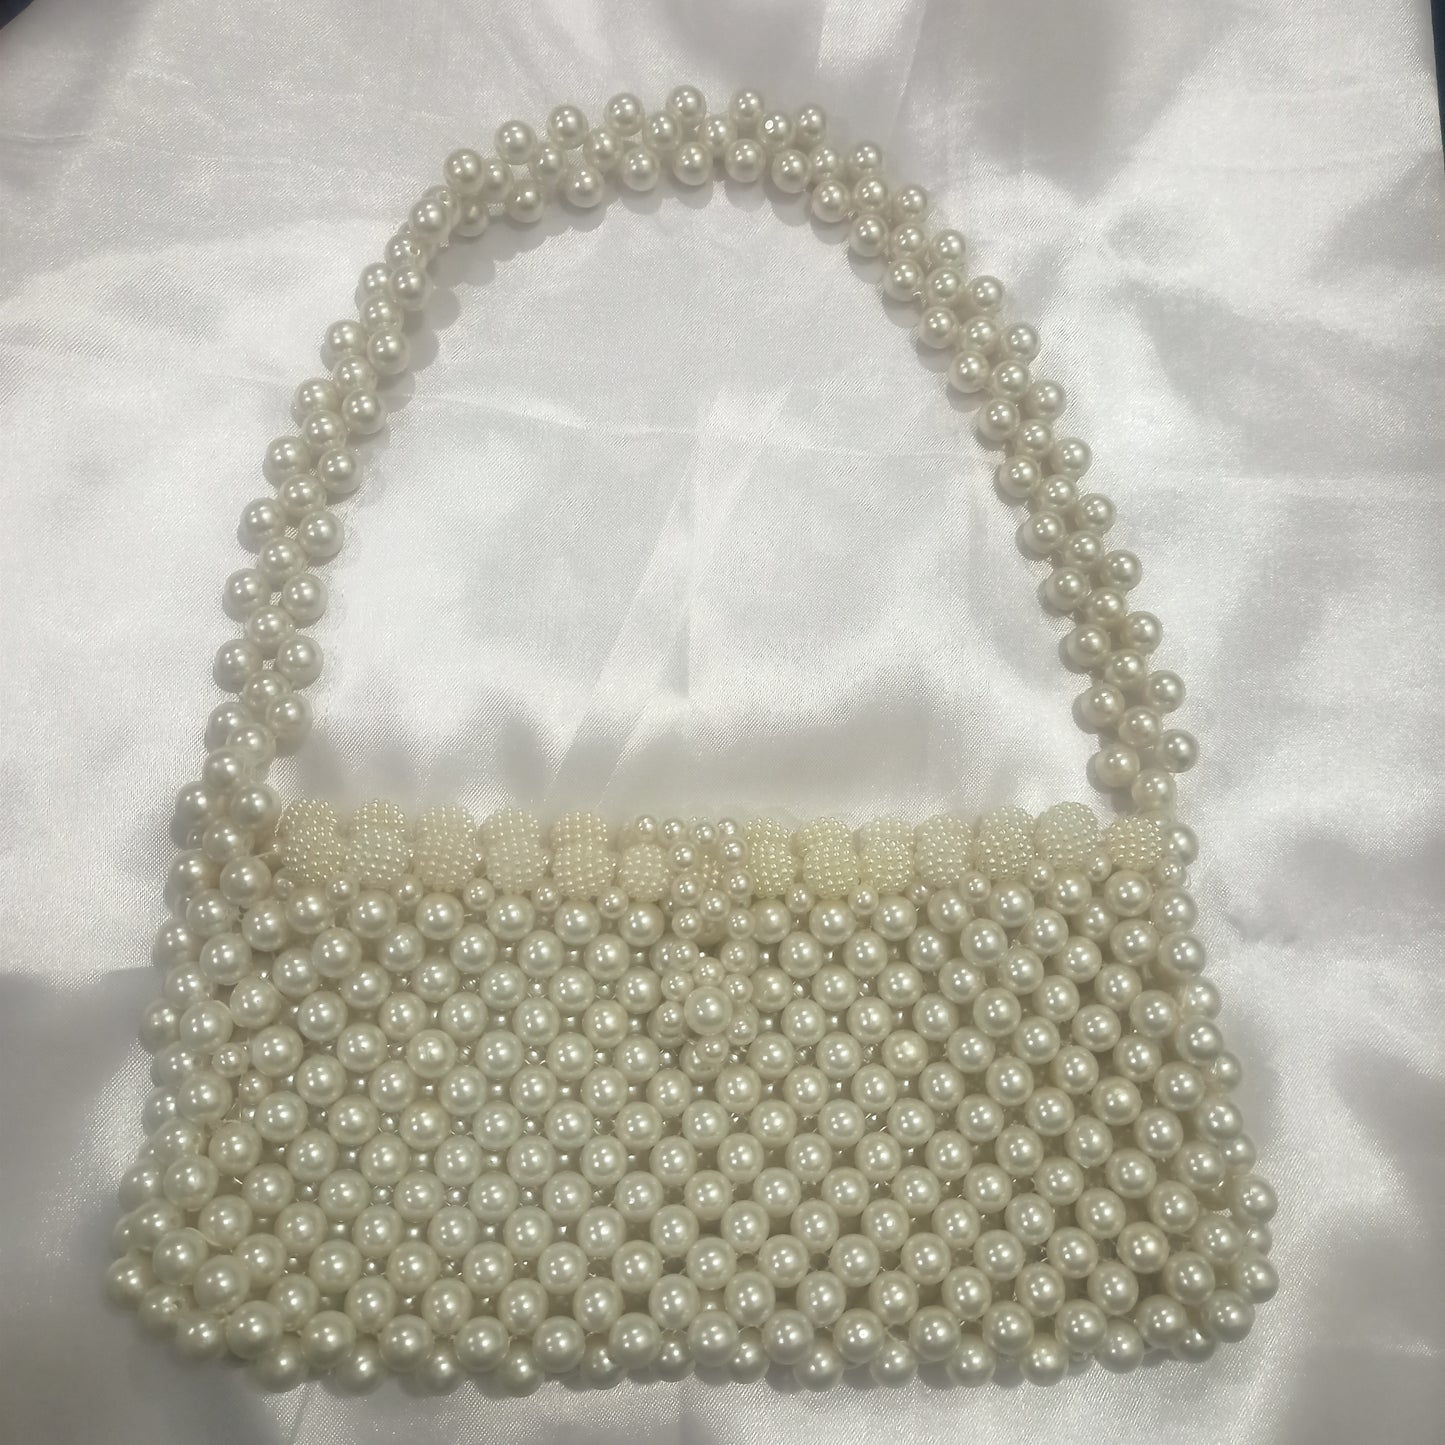 Ivory pearl hand bag